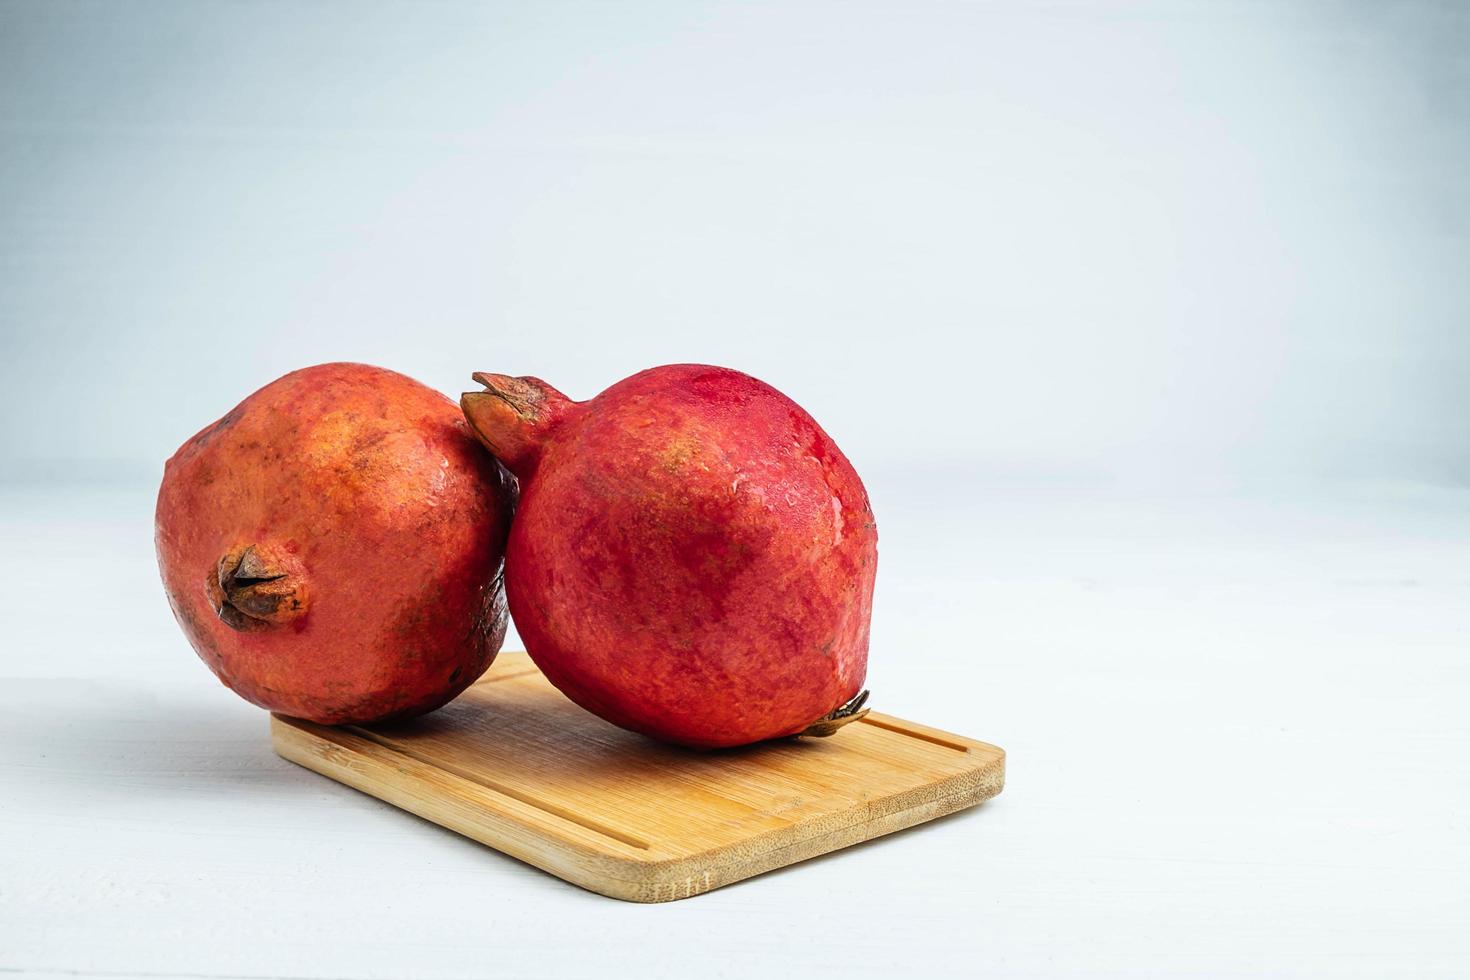 fruta de la granada en una tabla de madera foto